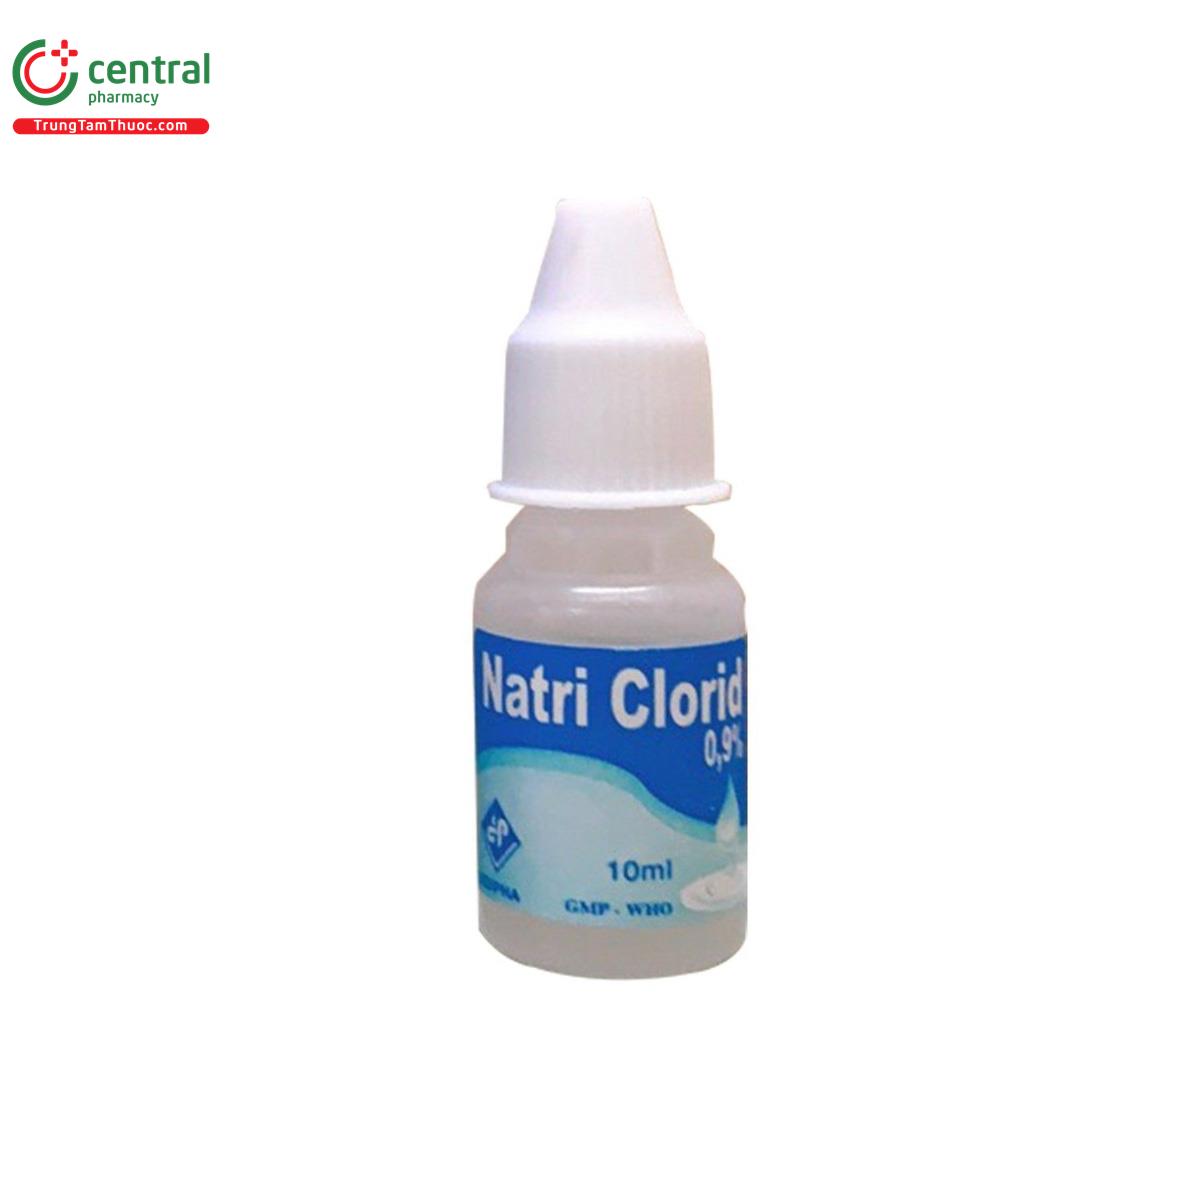 Natri Clorid 0,9% 10ml Vidipha